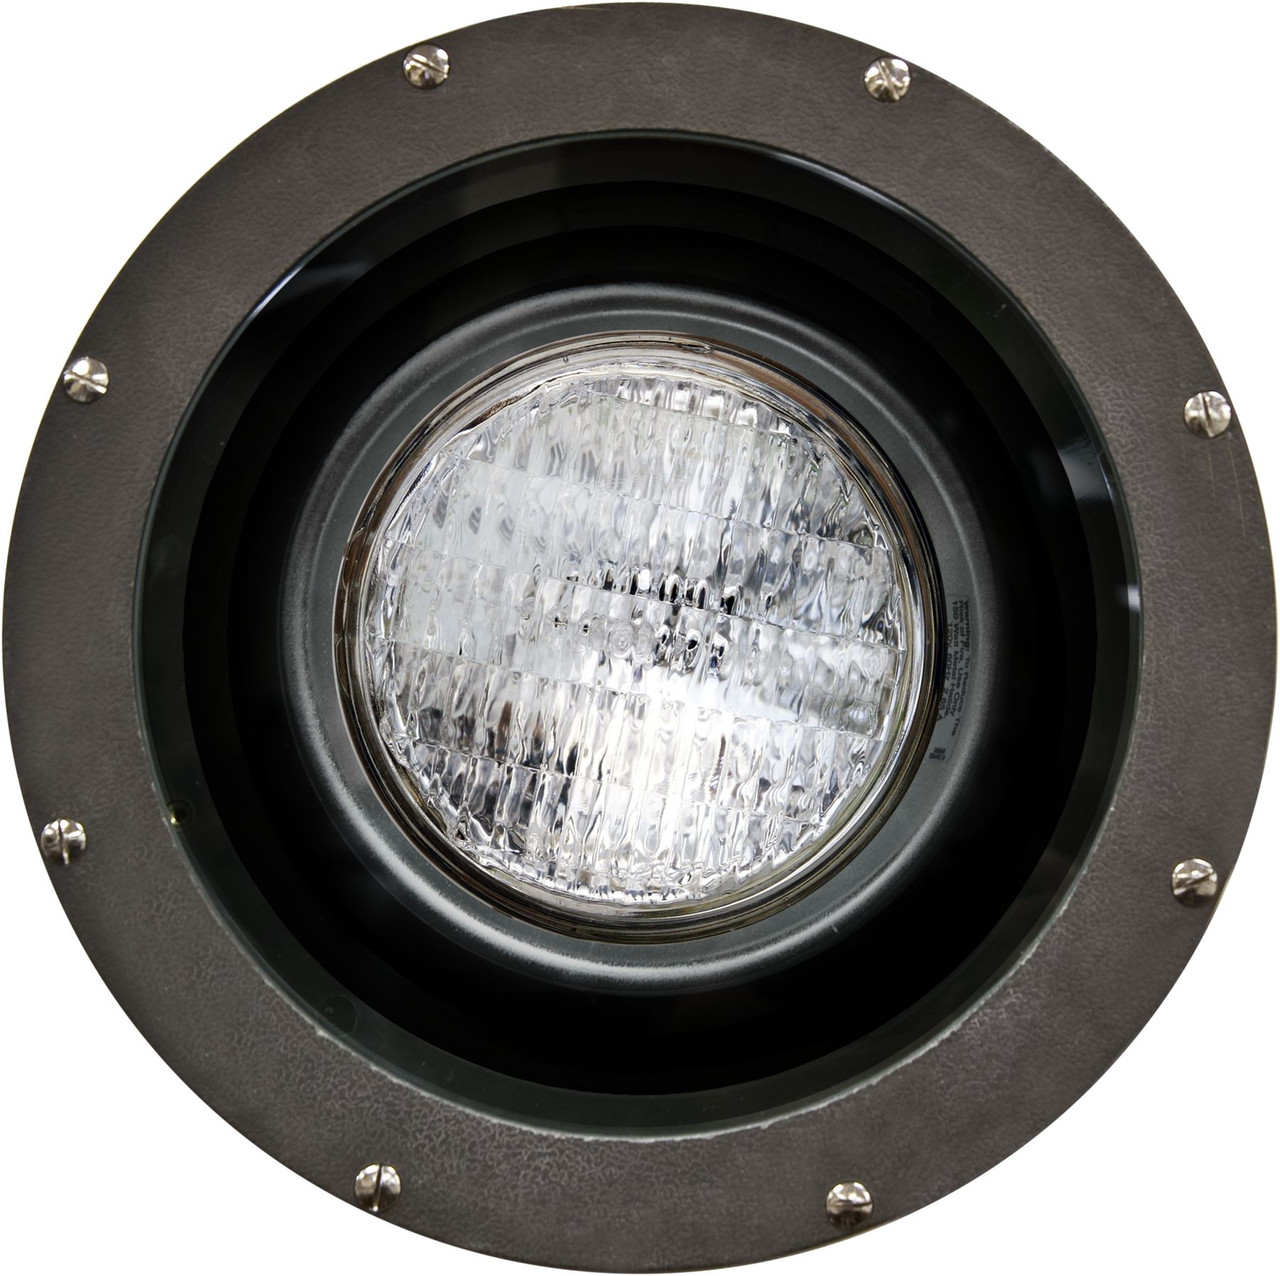 DABMAR LIGHTING FG4300-LED40-RGBW FIBERGLASS WELL LIGHT PAR56 LED 40W RGBW SPOT 120V, Bronze